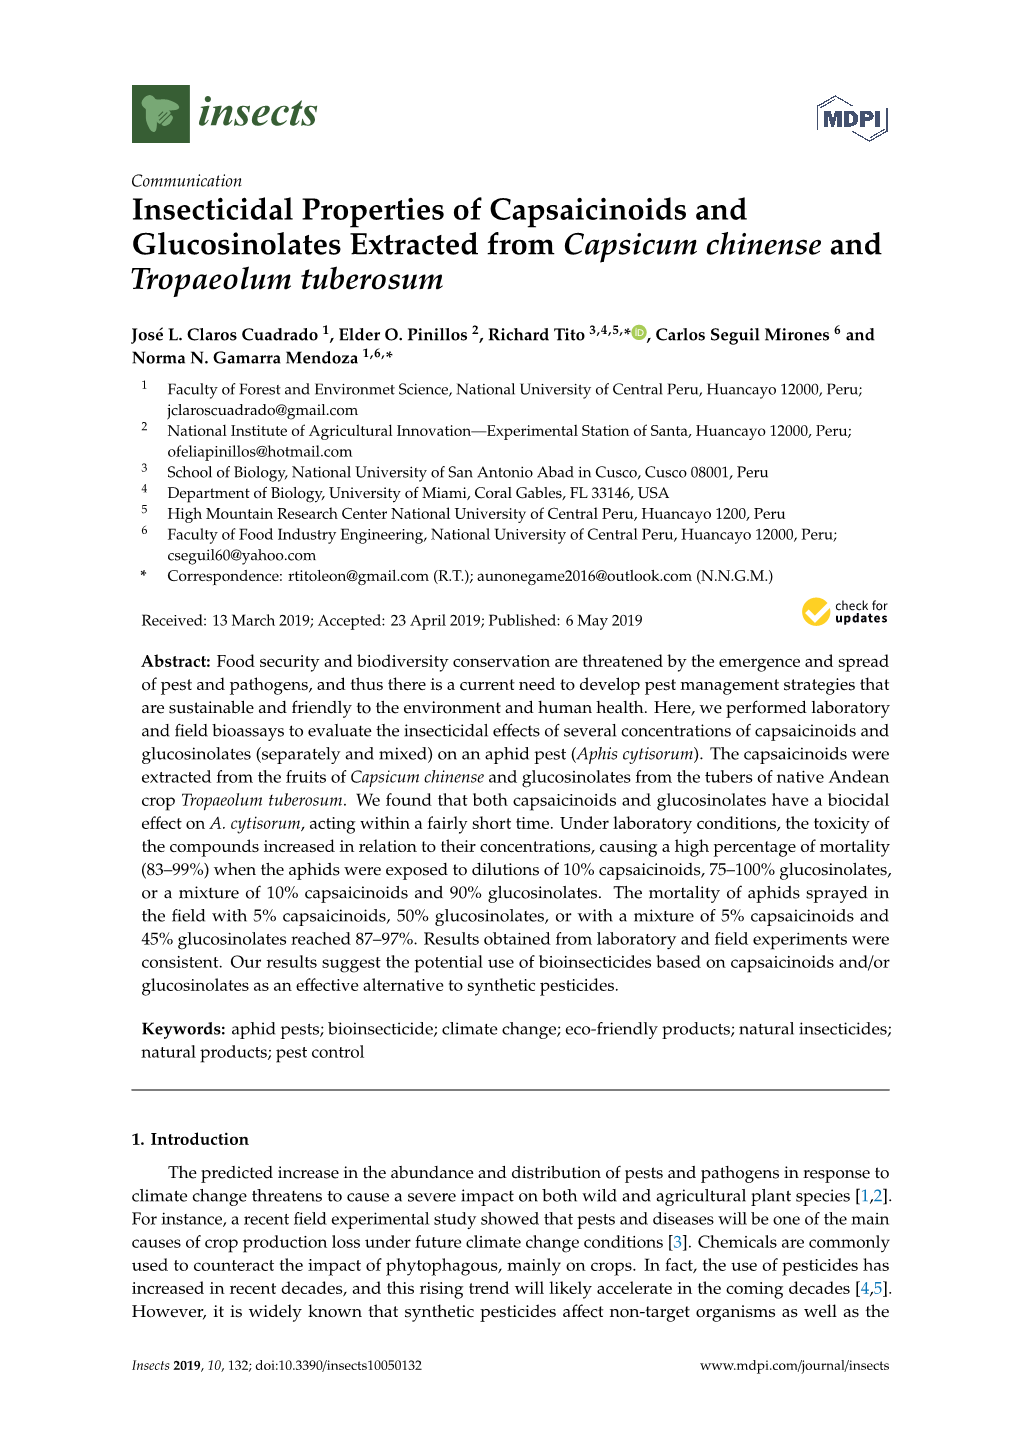 Insecticidal Properties of Capsaicinoids and Glucosinolates Extracted from Capsicum Chinense and Tropaeolum Tuberosum